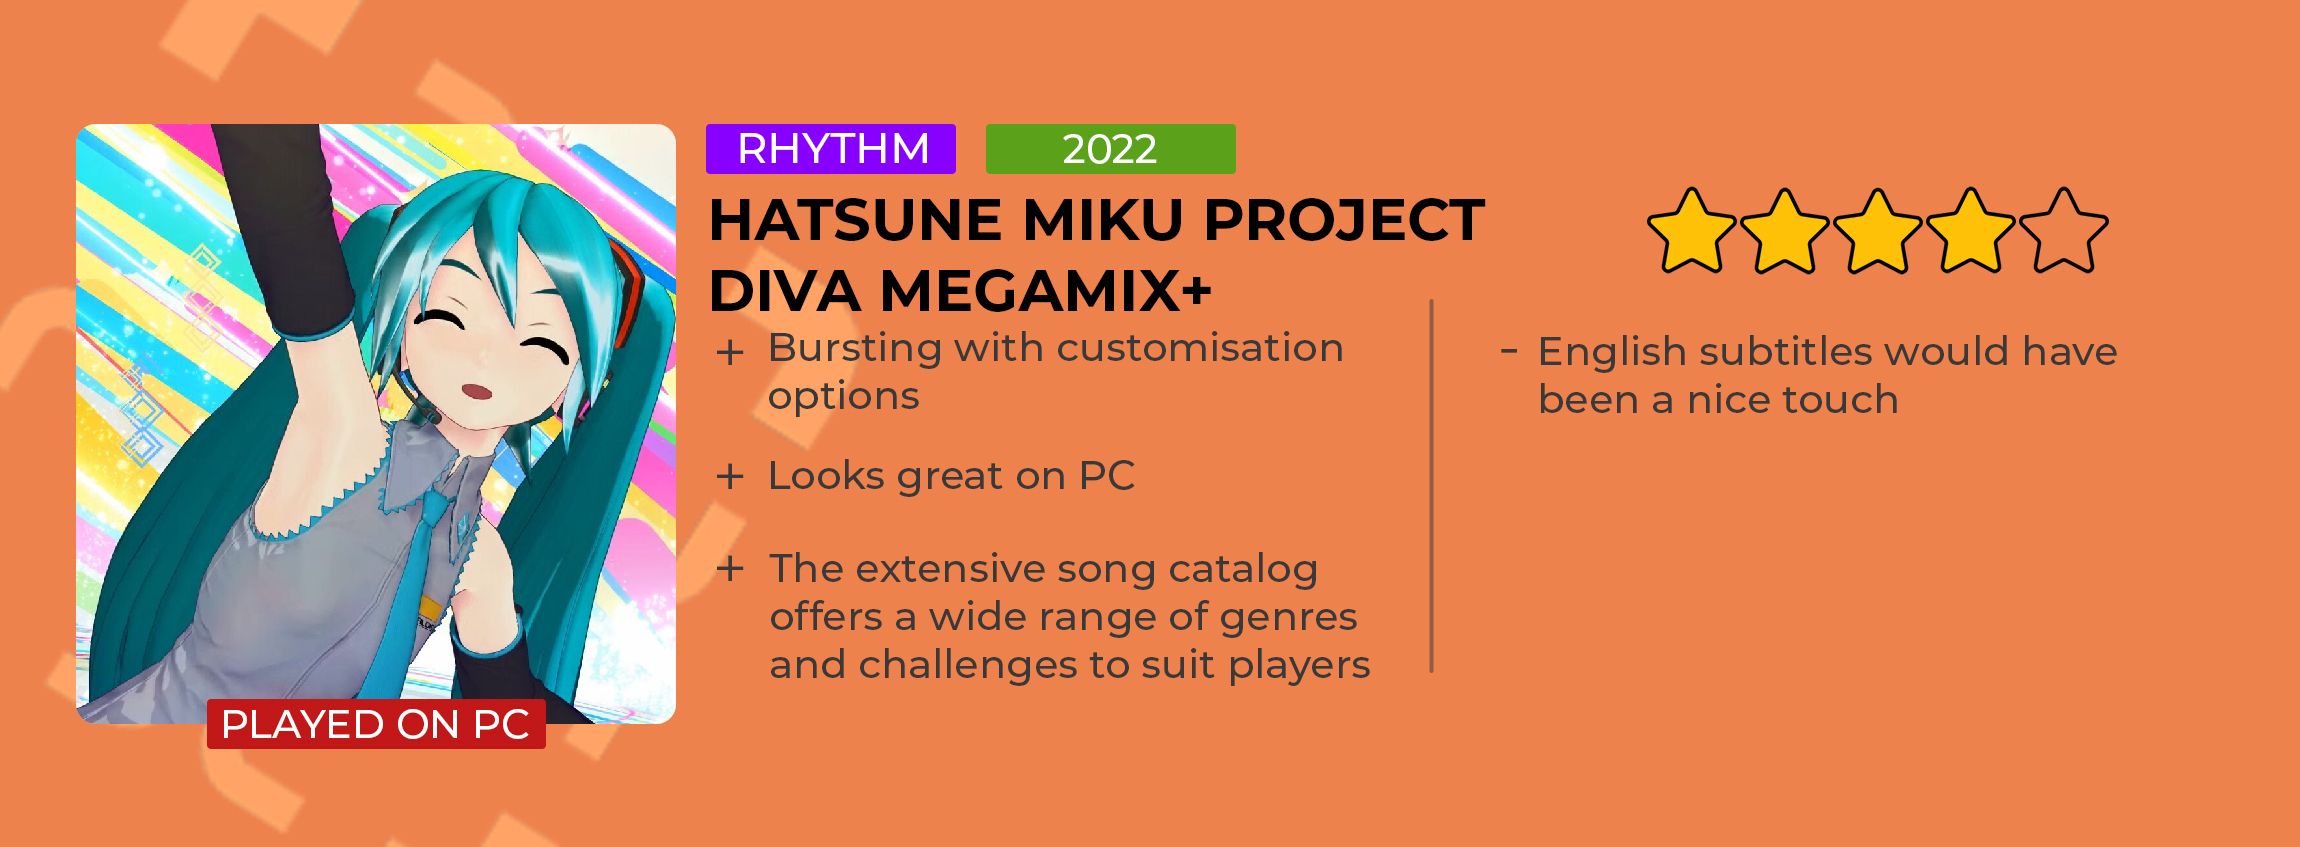 Hatsune Miku Project Diva Megamix+ Review Card